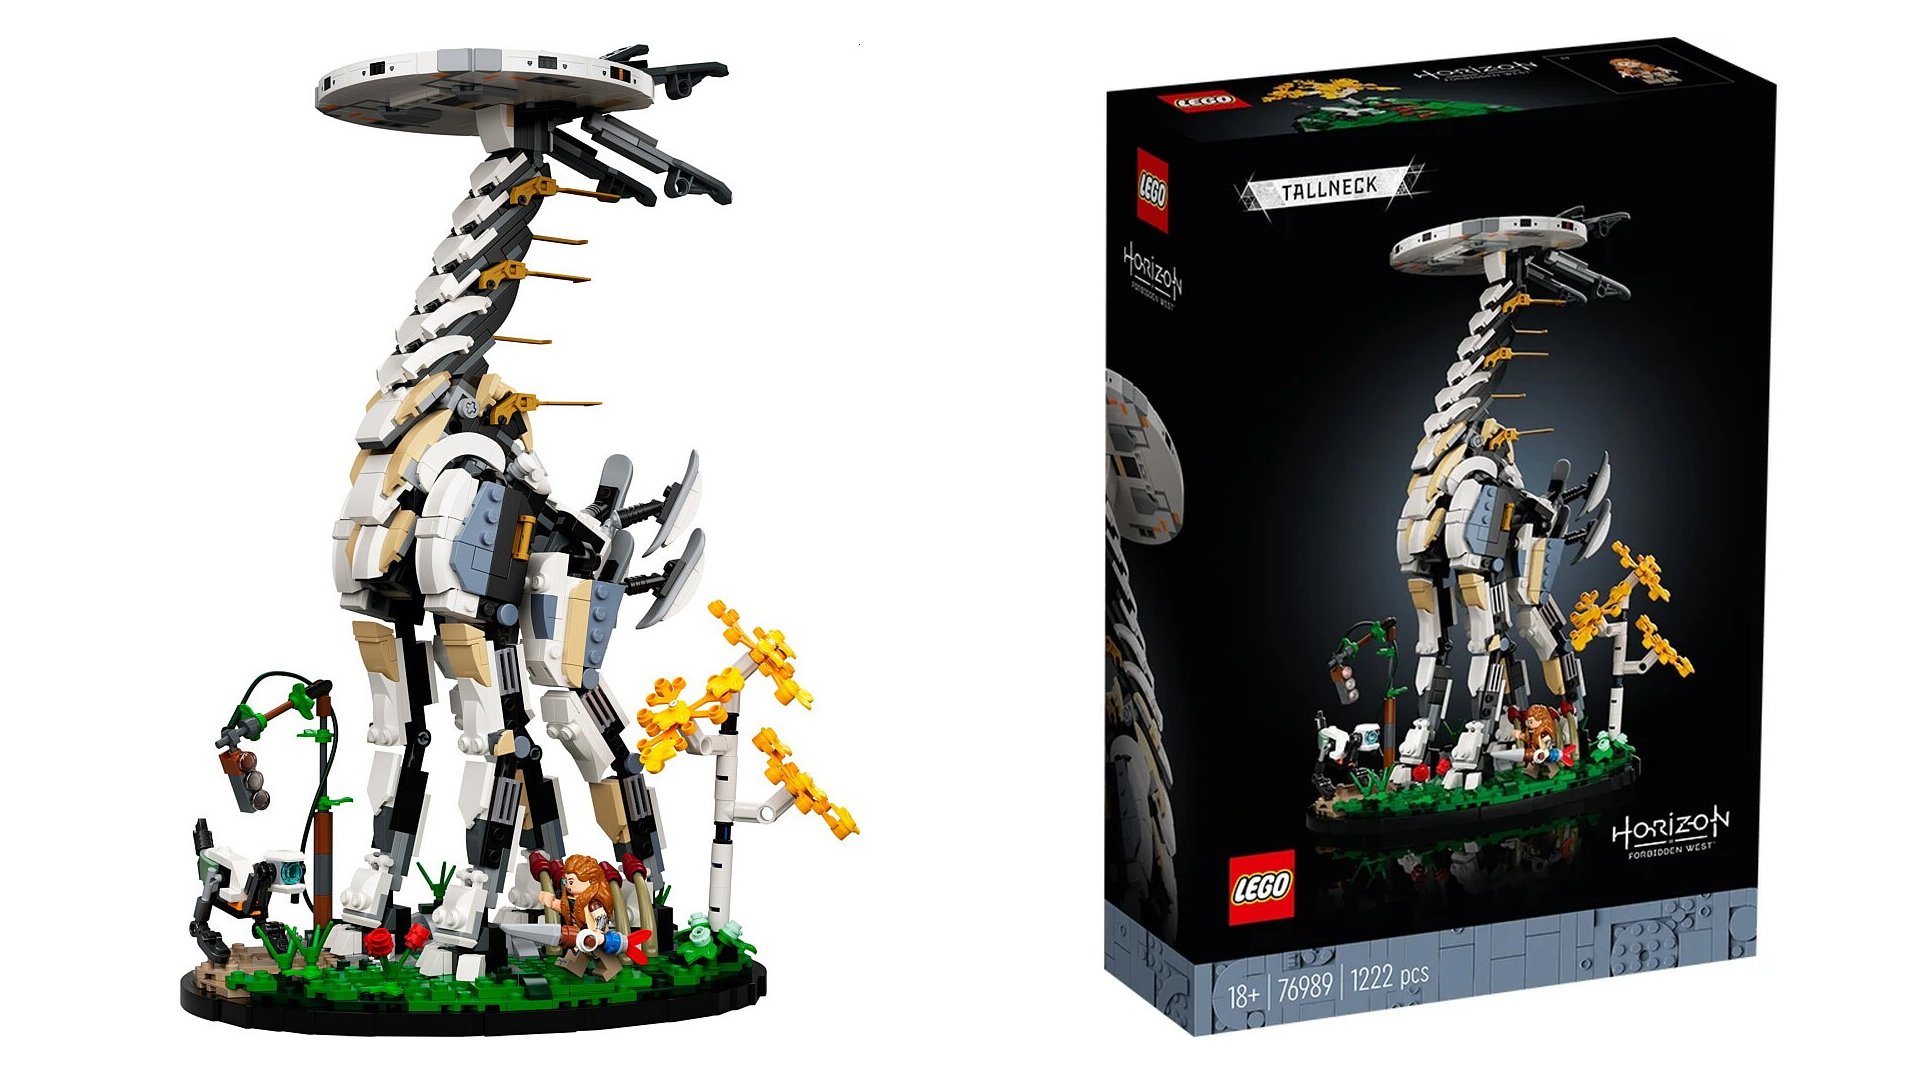 Horizon Forbidden West is getting an official Lego set